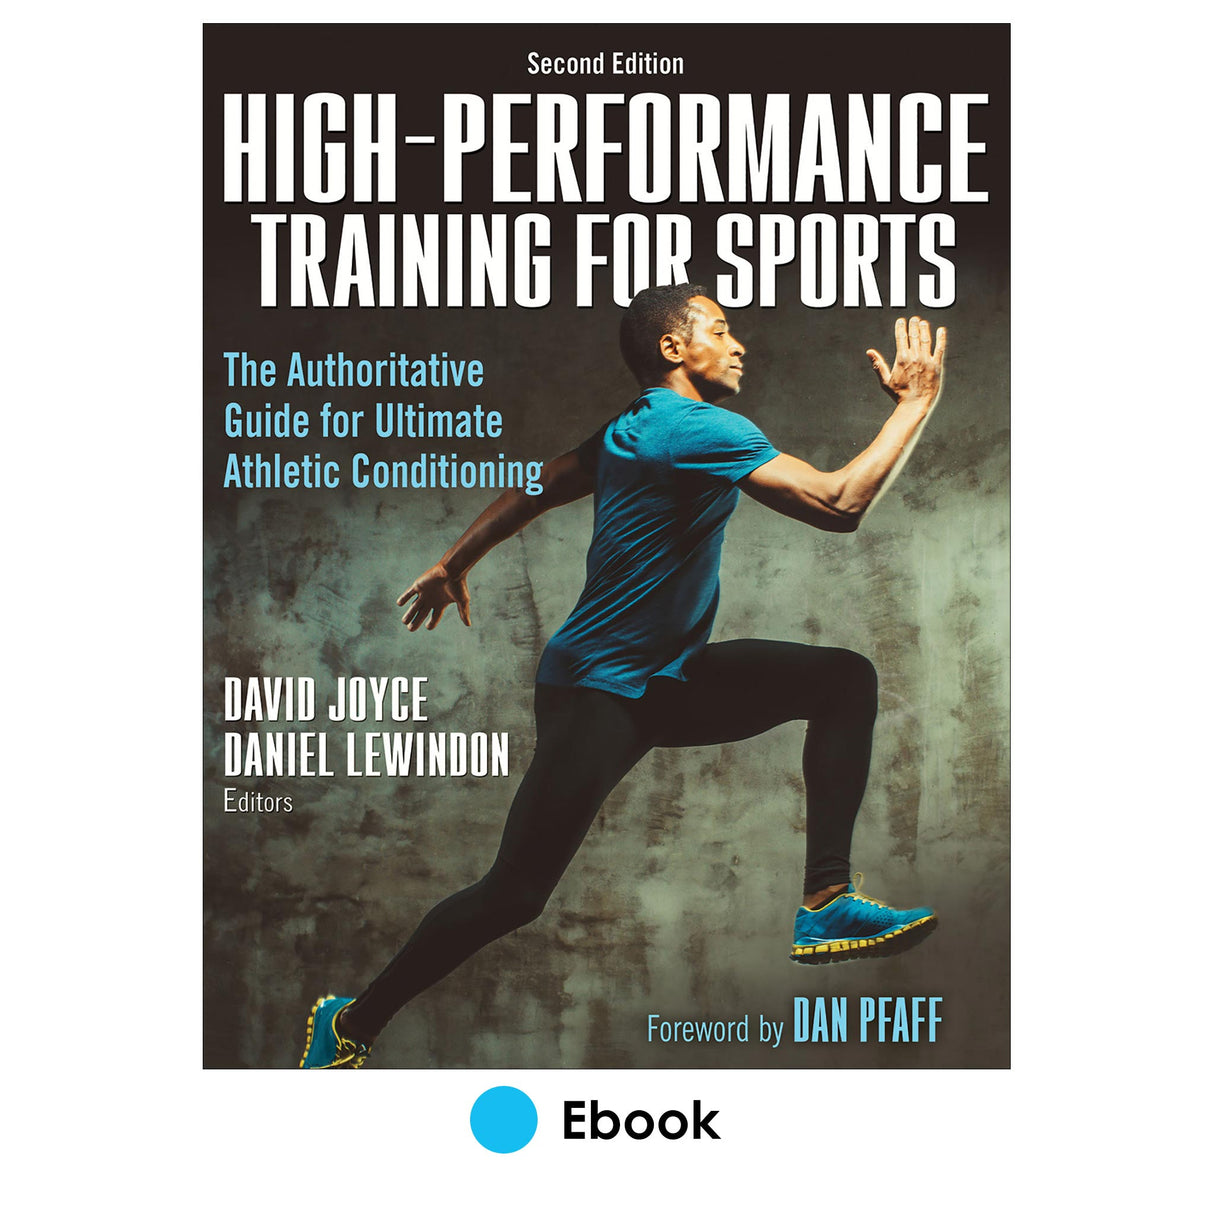 High-Performance Training for Sports 2nd Edition epub